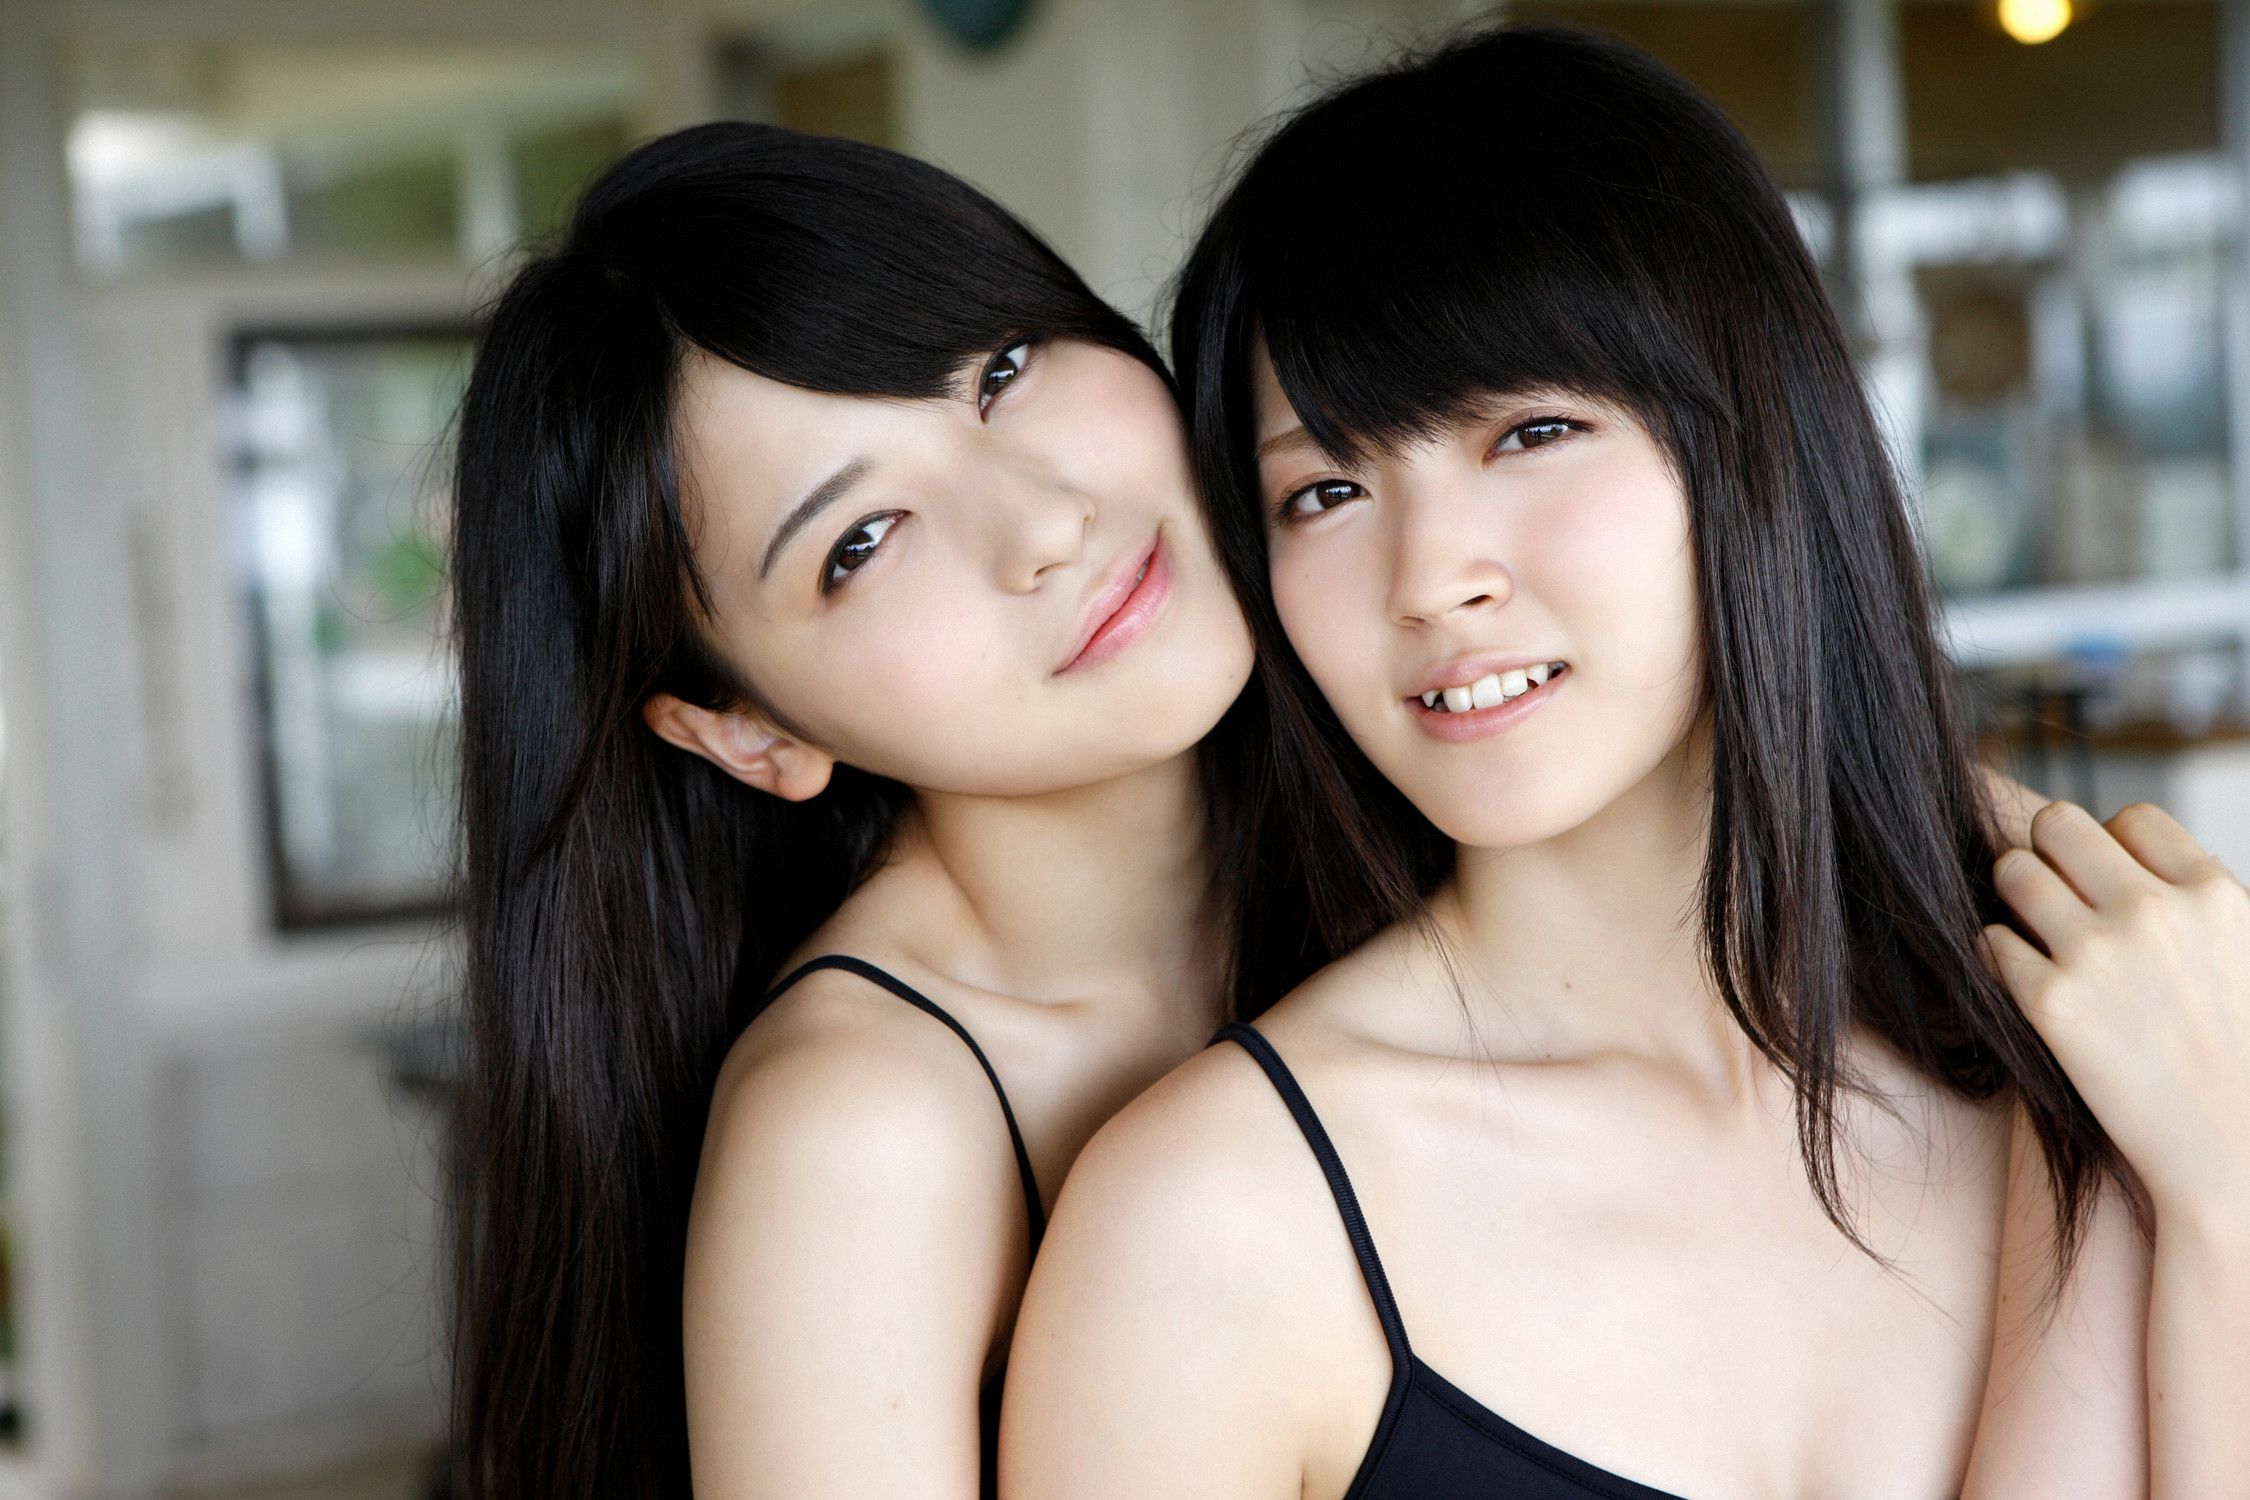 Jap video. Airi Suzuki and Maimi Yajima. Японская девушка. Две девочки азиатки. Красивые женщины Японии.